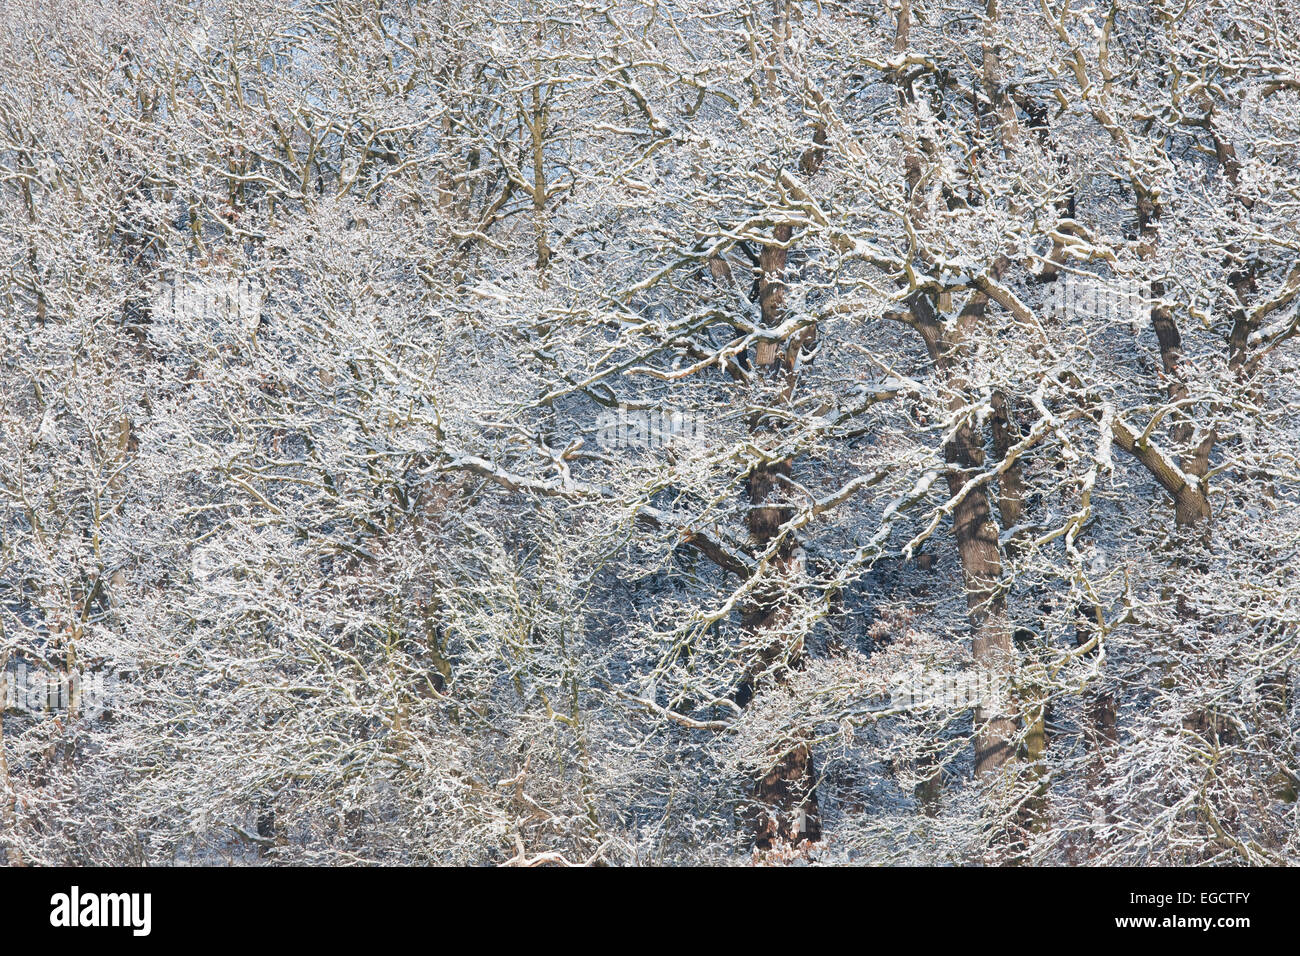 Snow-covered Pedunculate Oaks (Quercus robur), Thuringia, Germany Stock Photo